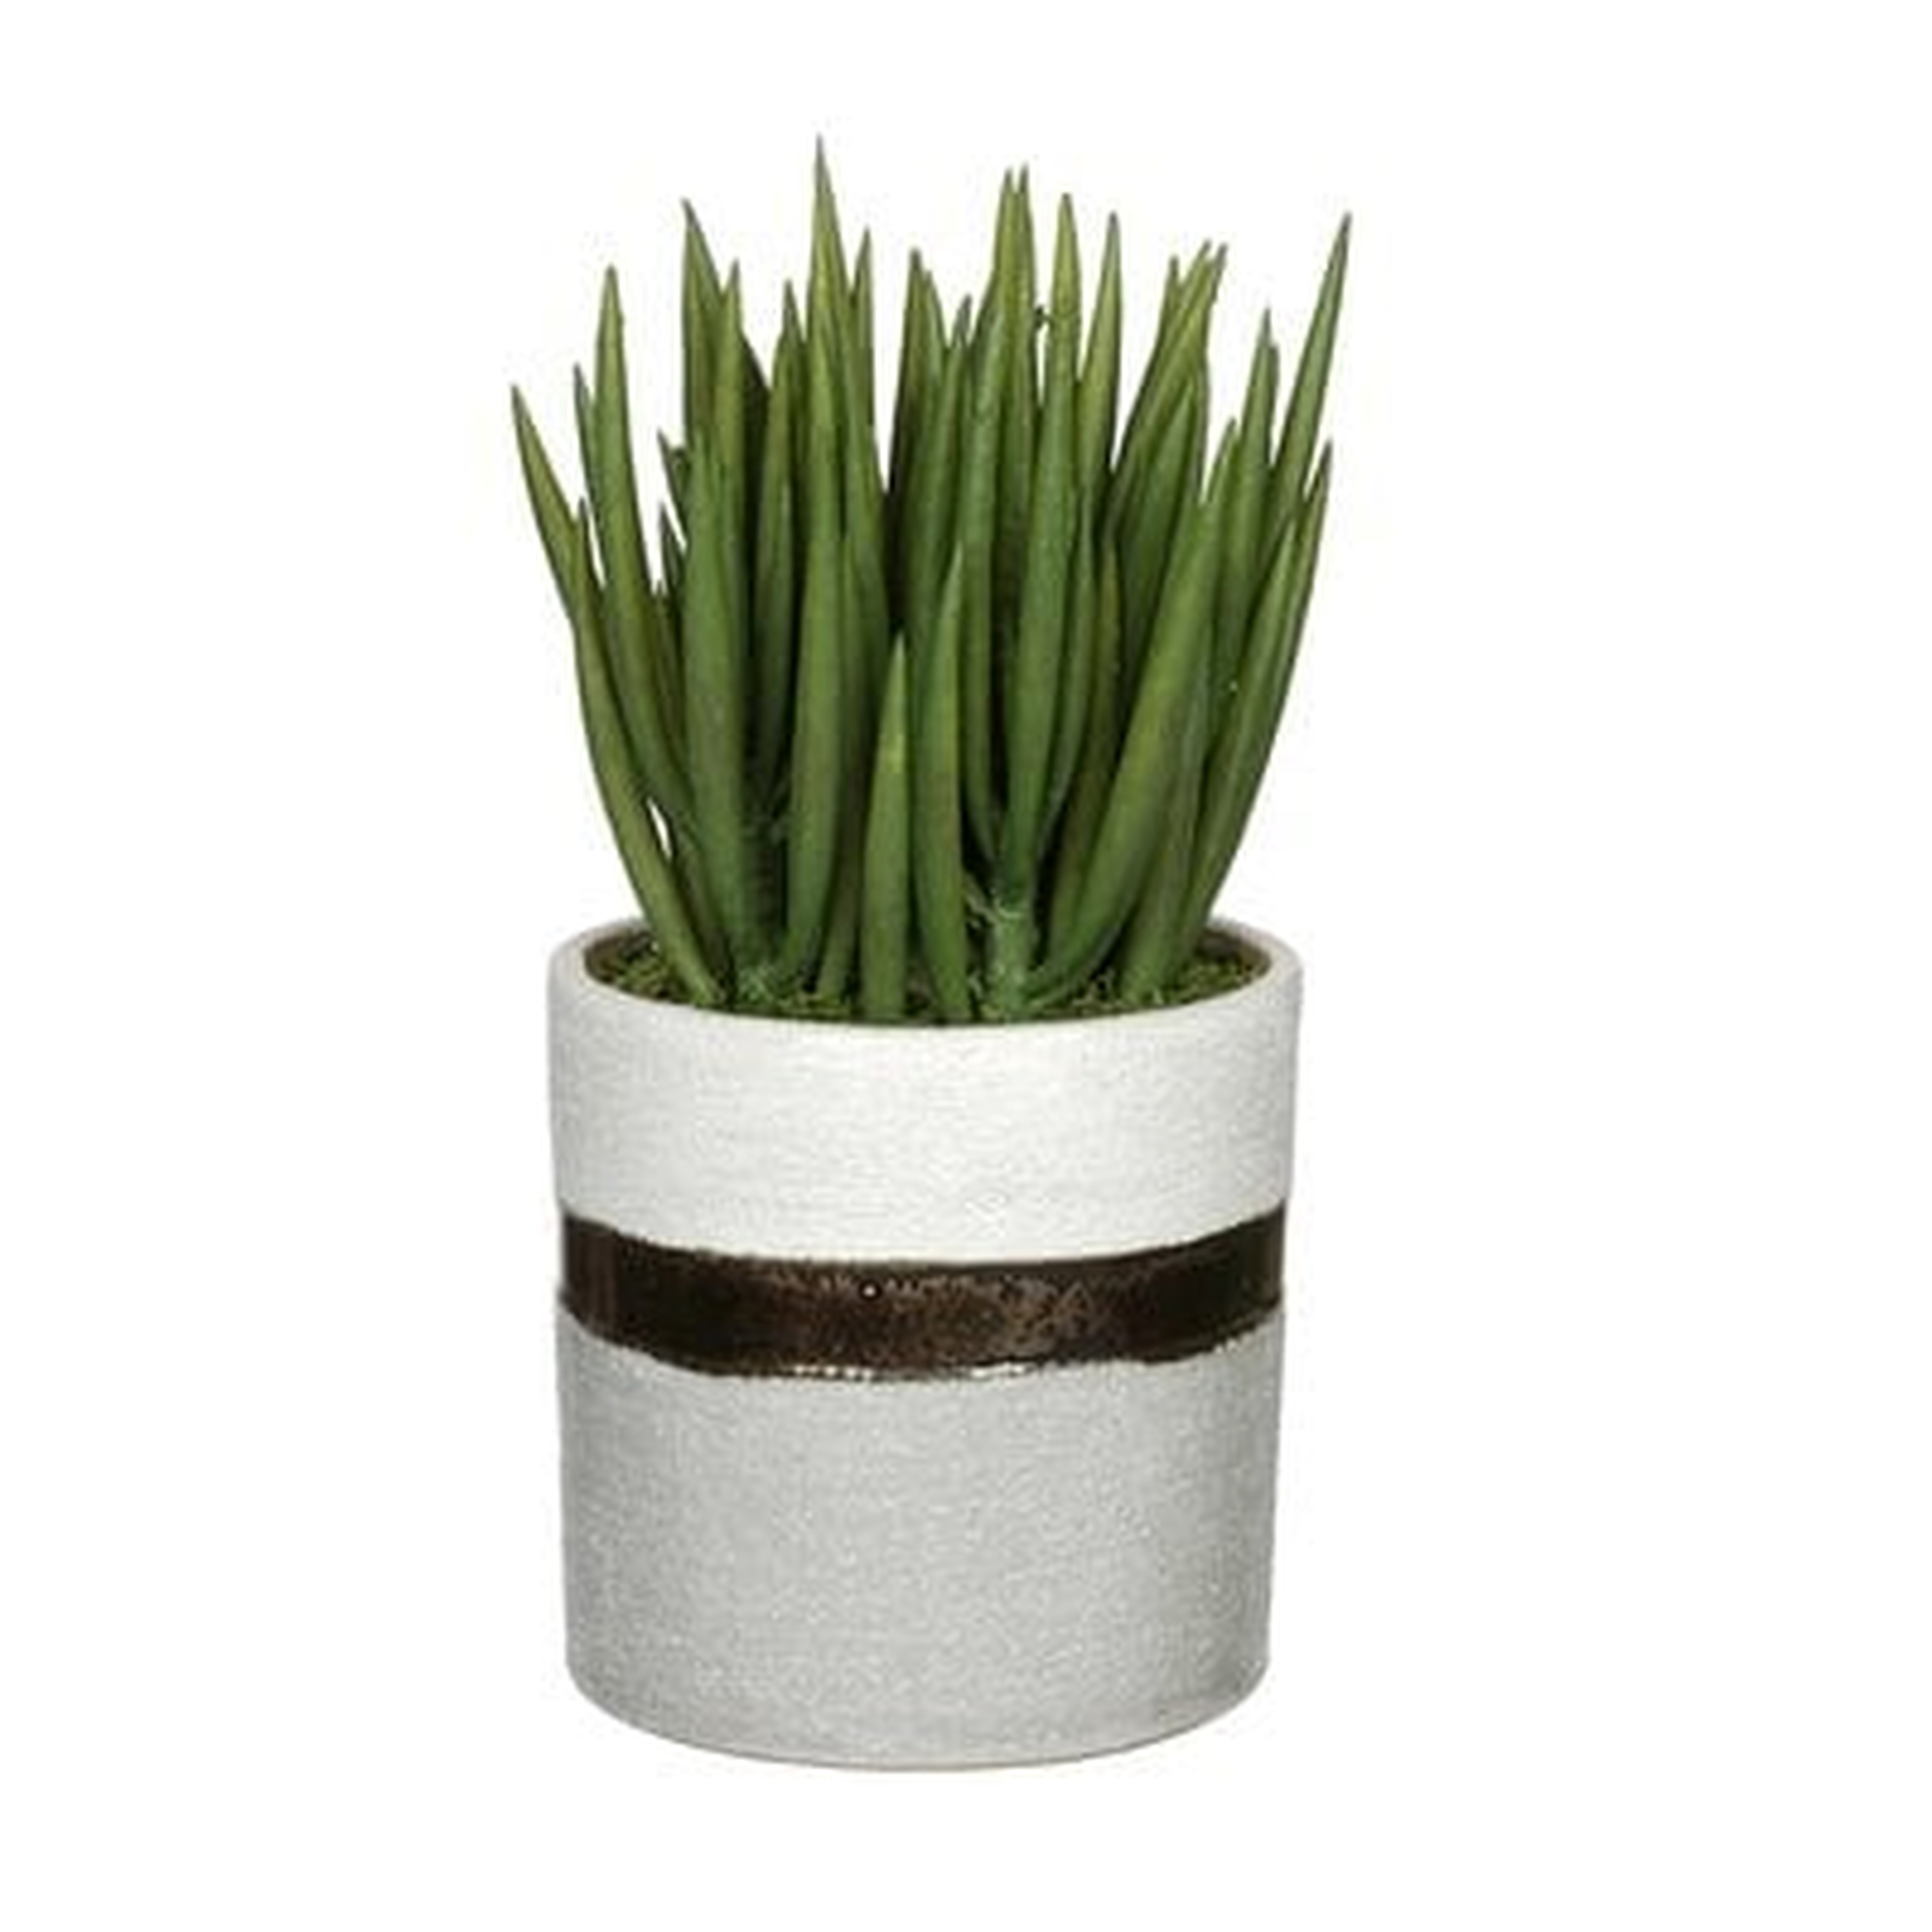 Artificial Sea Sanded Ceramic Aloe Plant in Decorative Vase - Wayfair